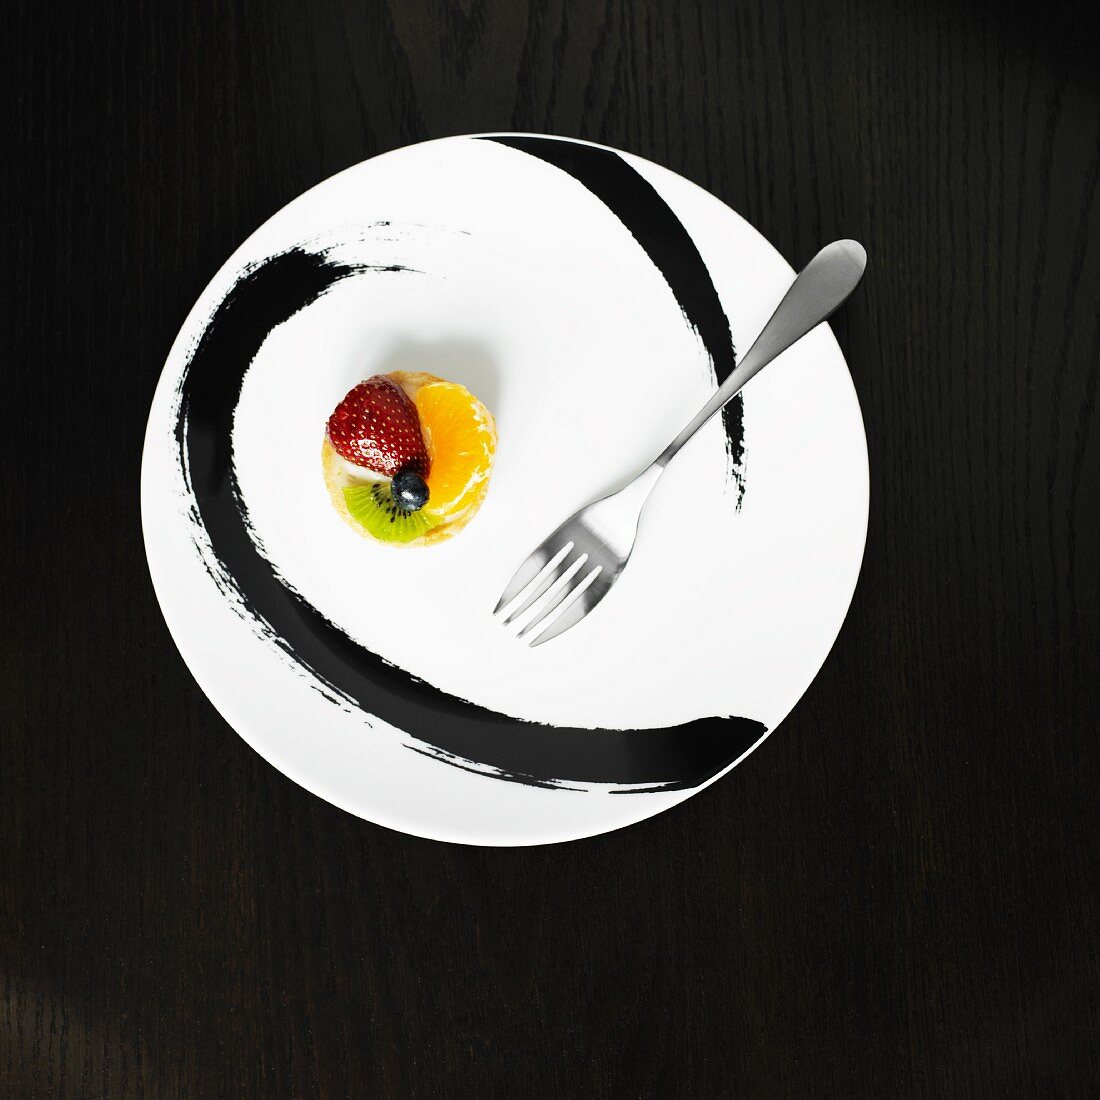 Mini Fruit Tart on a Black and White Plate; Fork